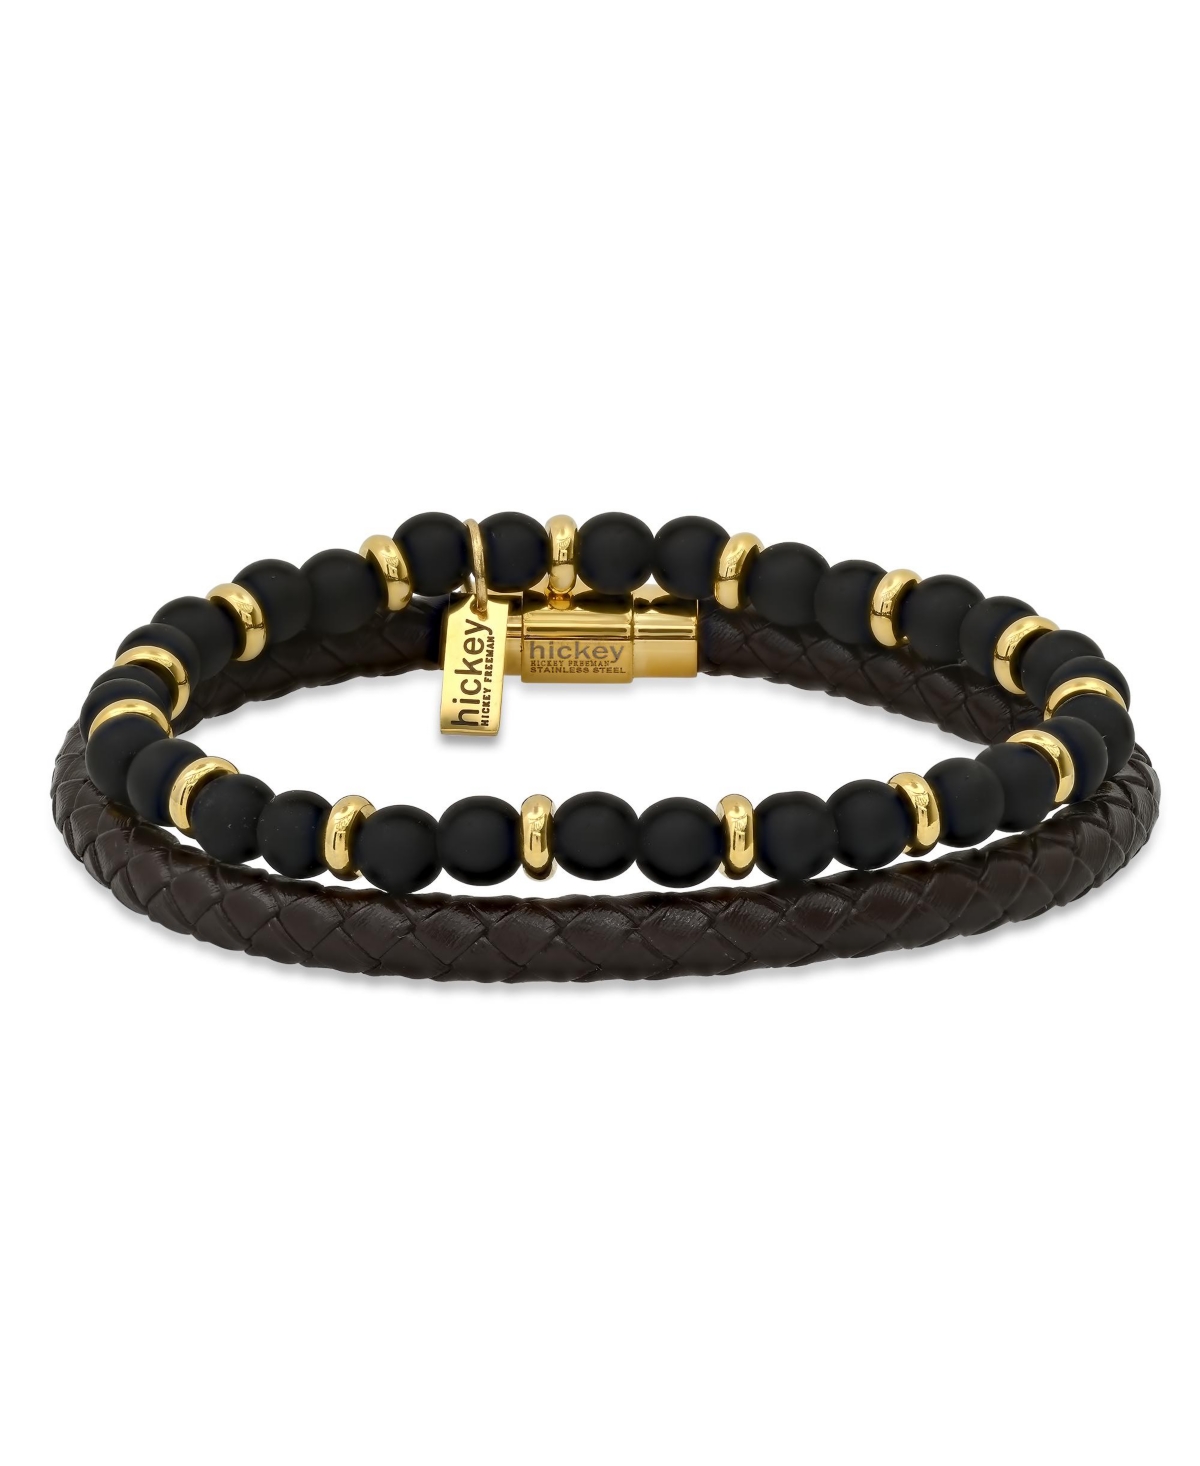 Hmy Jewelry Hickey By Hickey Freeman Roll-braided Genuine Leather Bracelet, 2 Piece Set In Gold